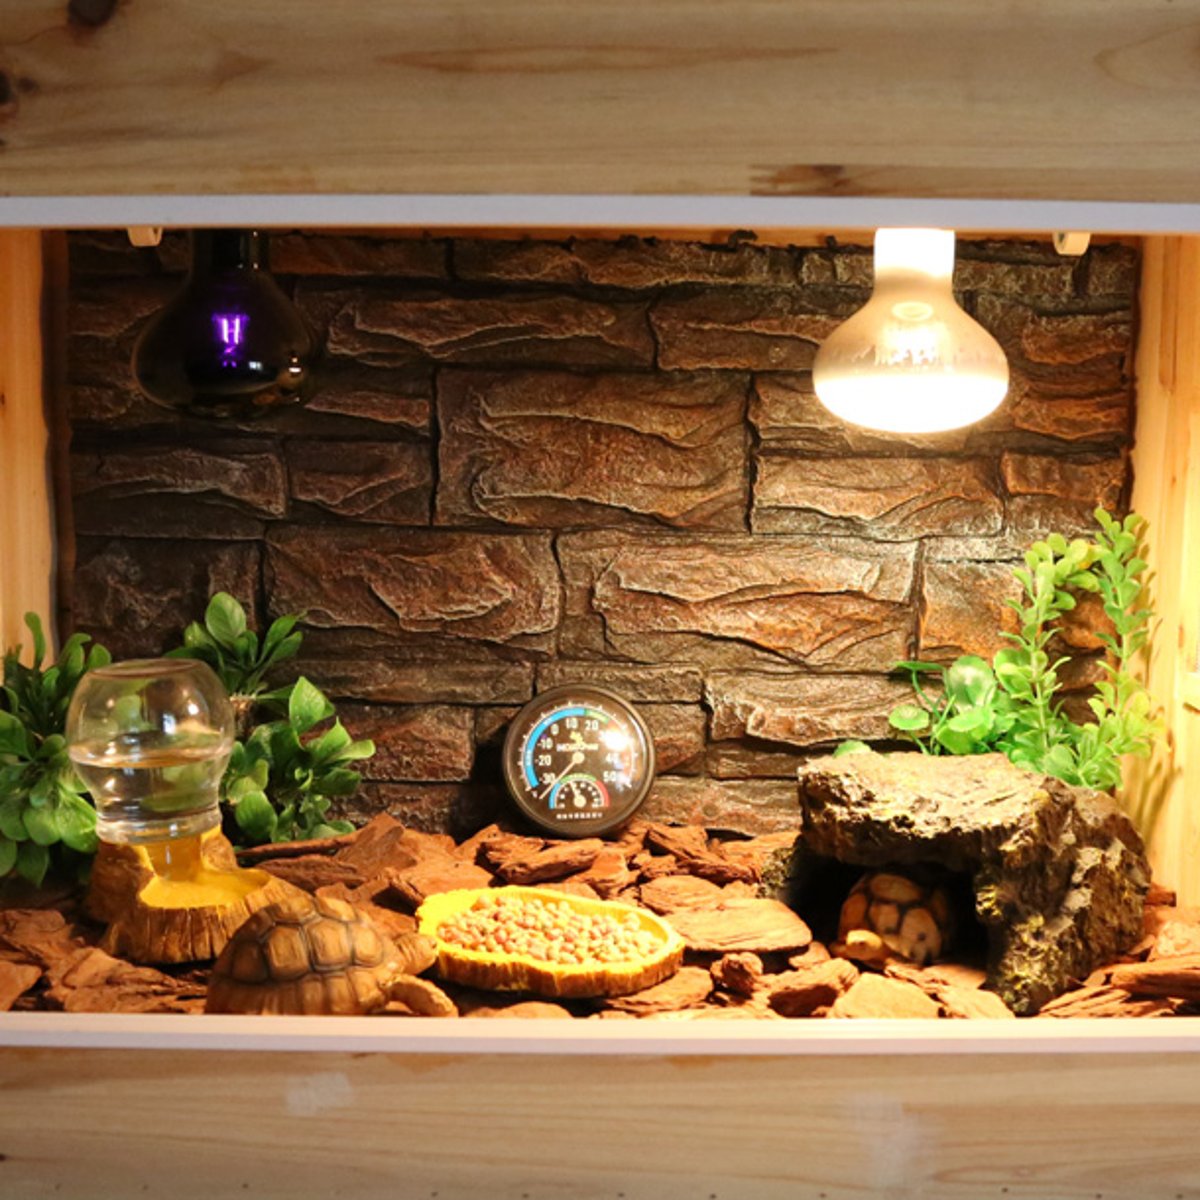 Wooden-Reptile-Vivarium-Terrariums-Heating-Cage-Lizard-Turtle-Breeding-Housing-Decorations-1551521